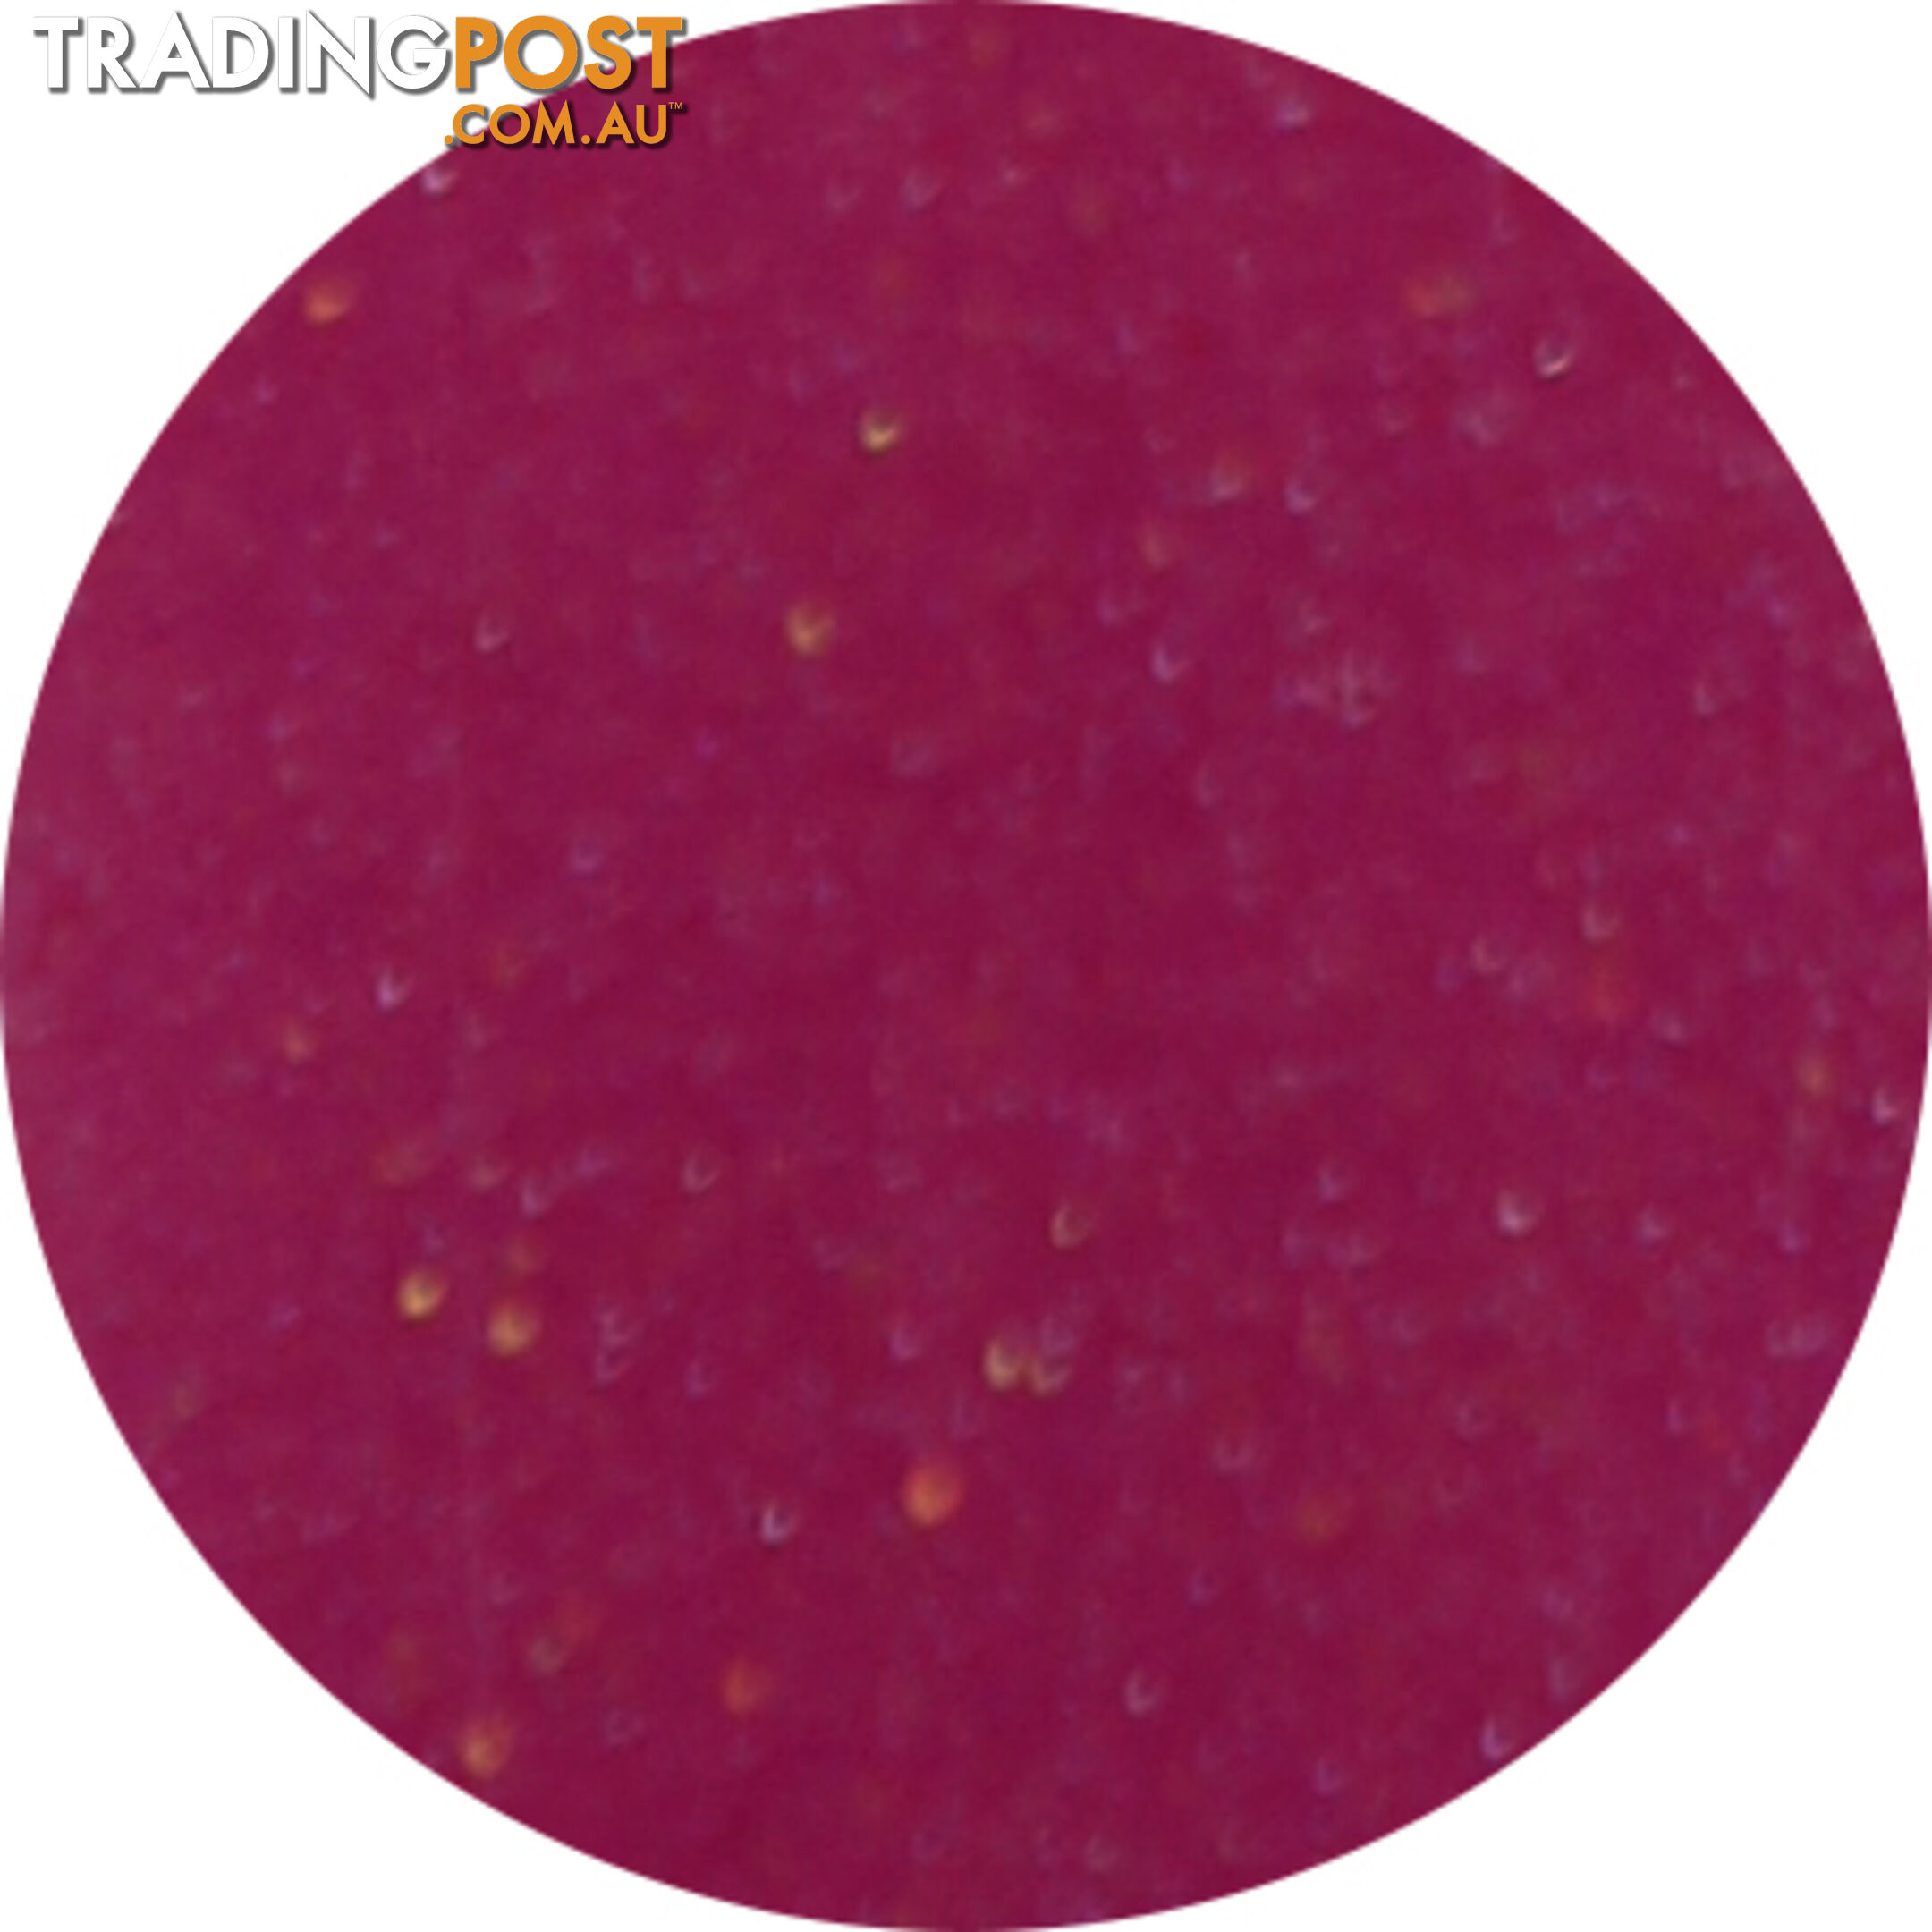 SNS HM11 Gelous Dipping Powder 43g (1.5oz) Strawberry Rhubarb Crumble - 655302844823